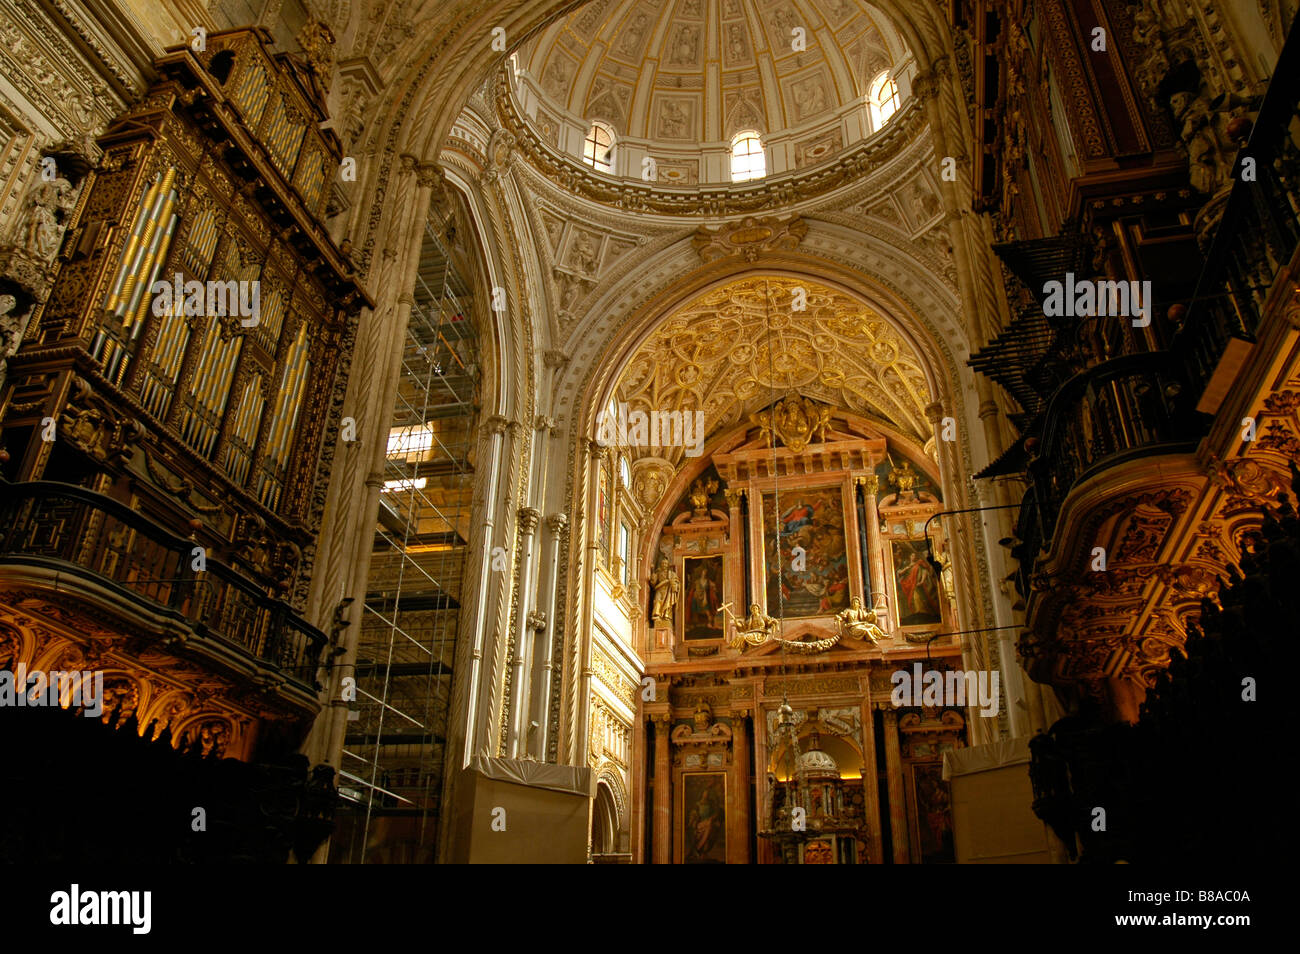 Altar & Interior of the great Moorish church Mosque, 'La Mezquita', Cordoba, Spain. Stock Photo